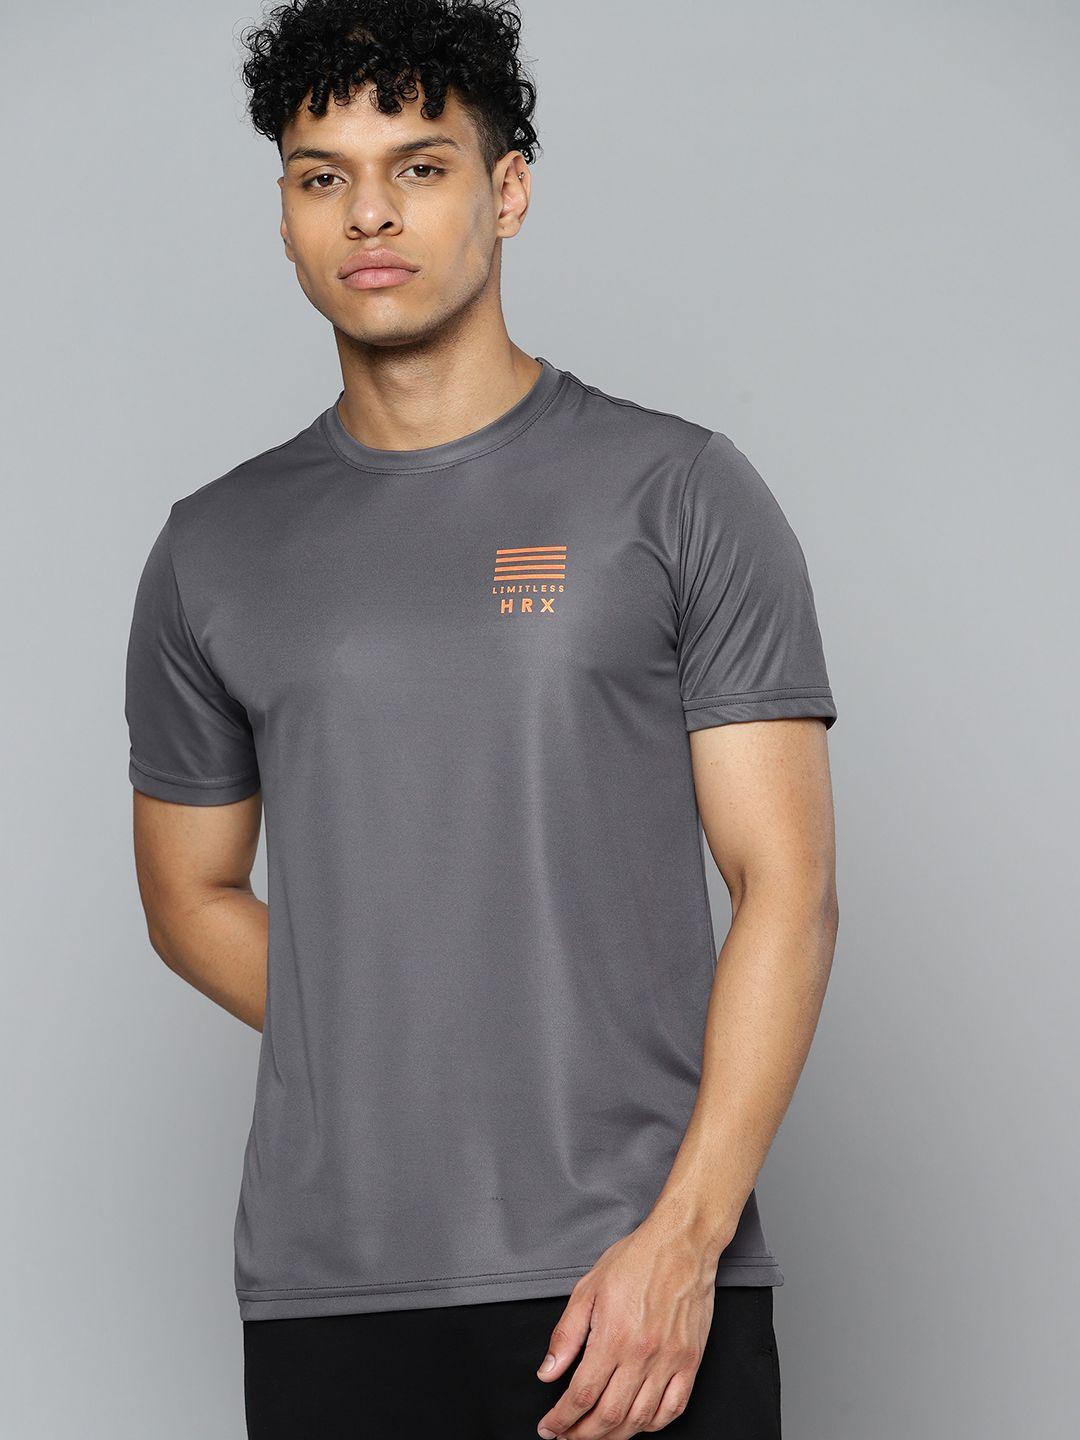 hrx-by-hrithik-roshan-printed-rapid-dry-training-or-gym-t-shirt